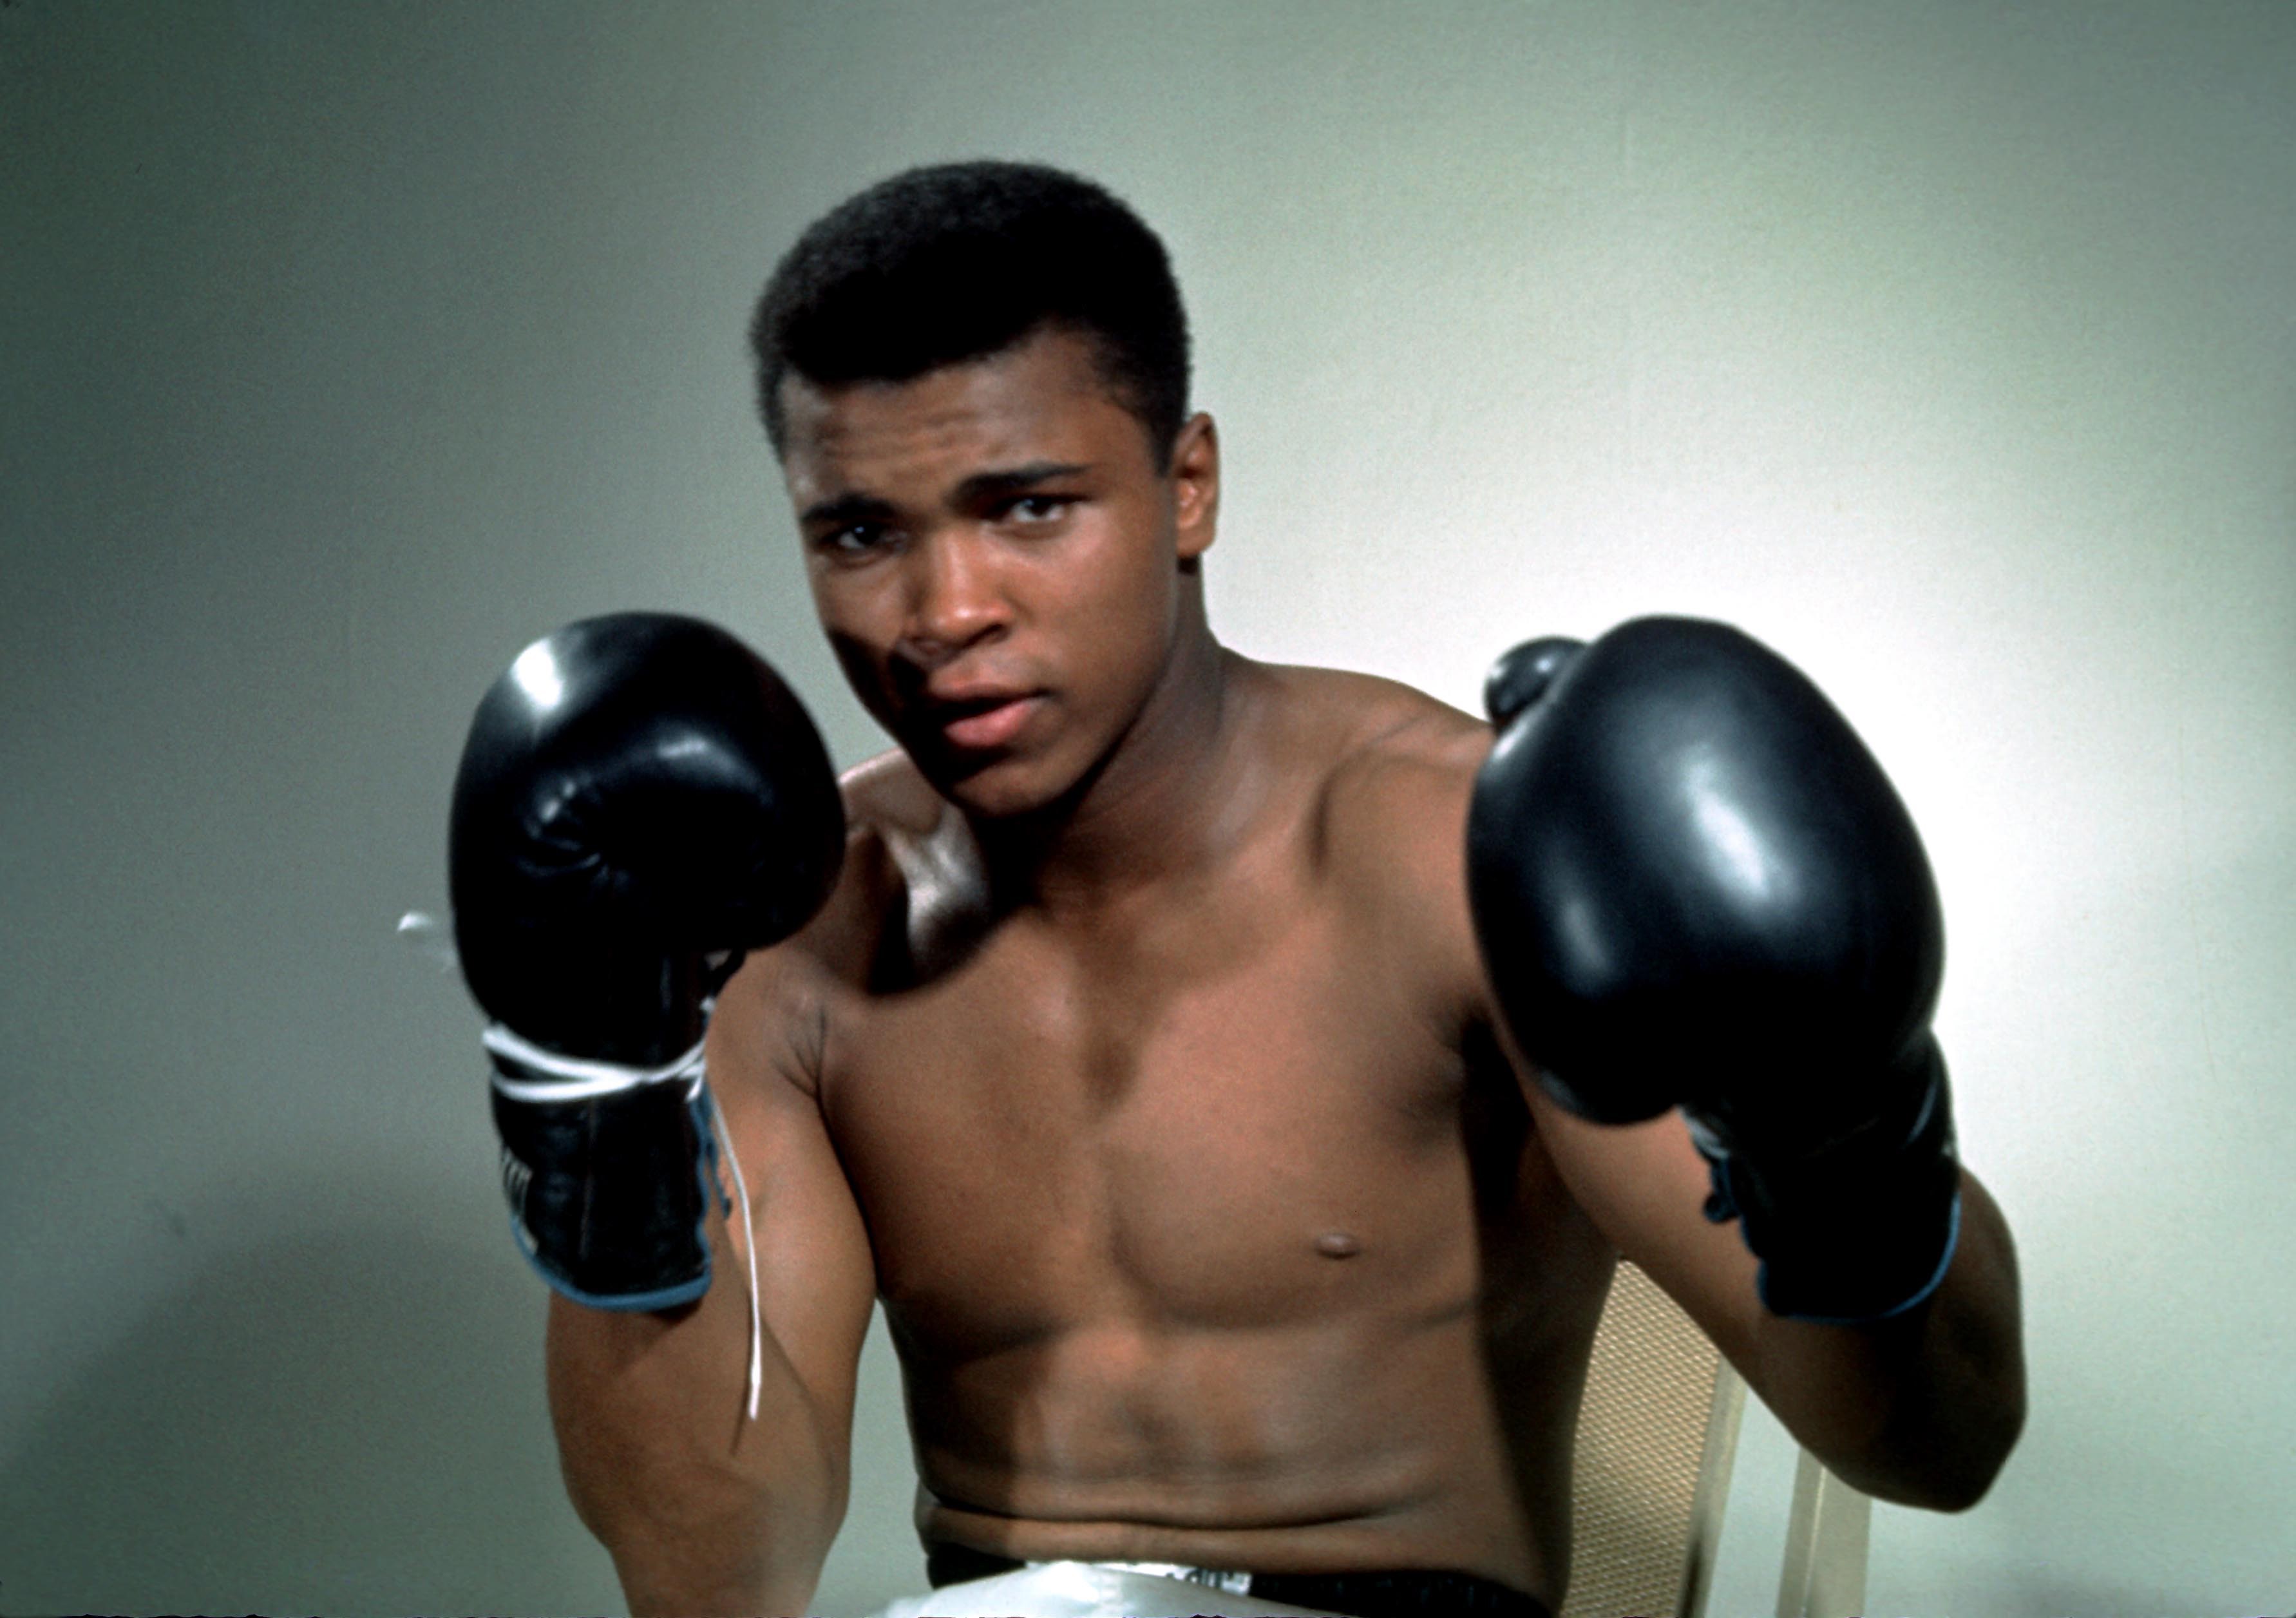 Muhammad Ali, boxing great and cultural symbol, dead at 74